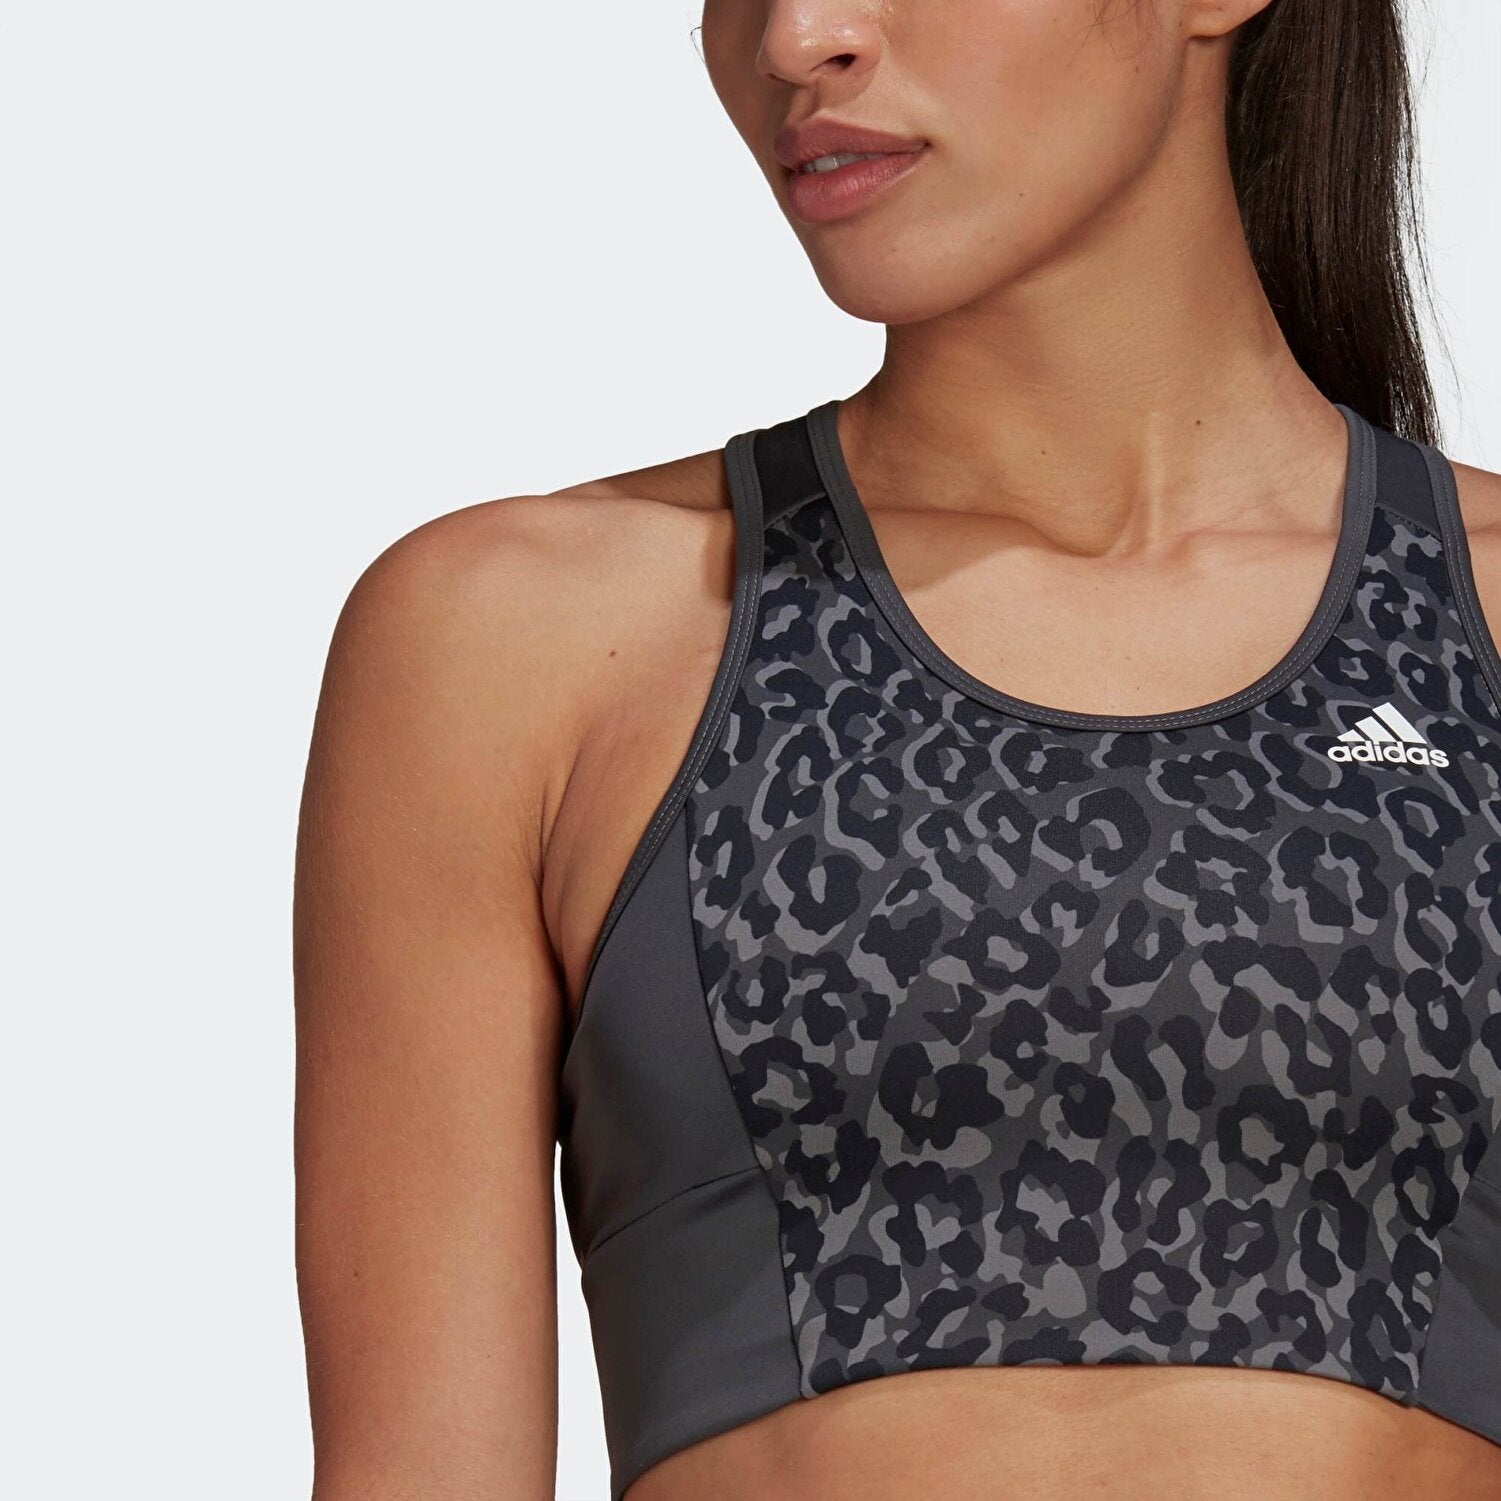 Adidas AREOREADY leopard print sports bra